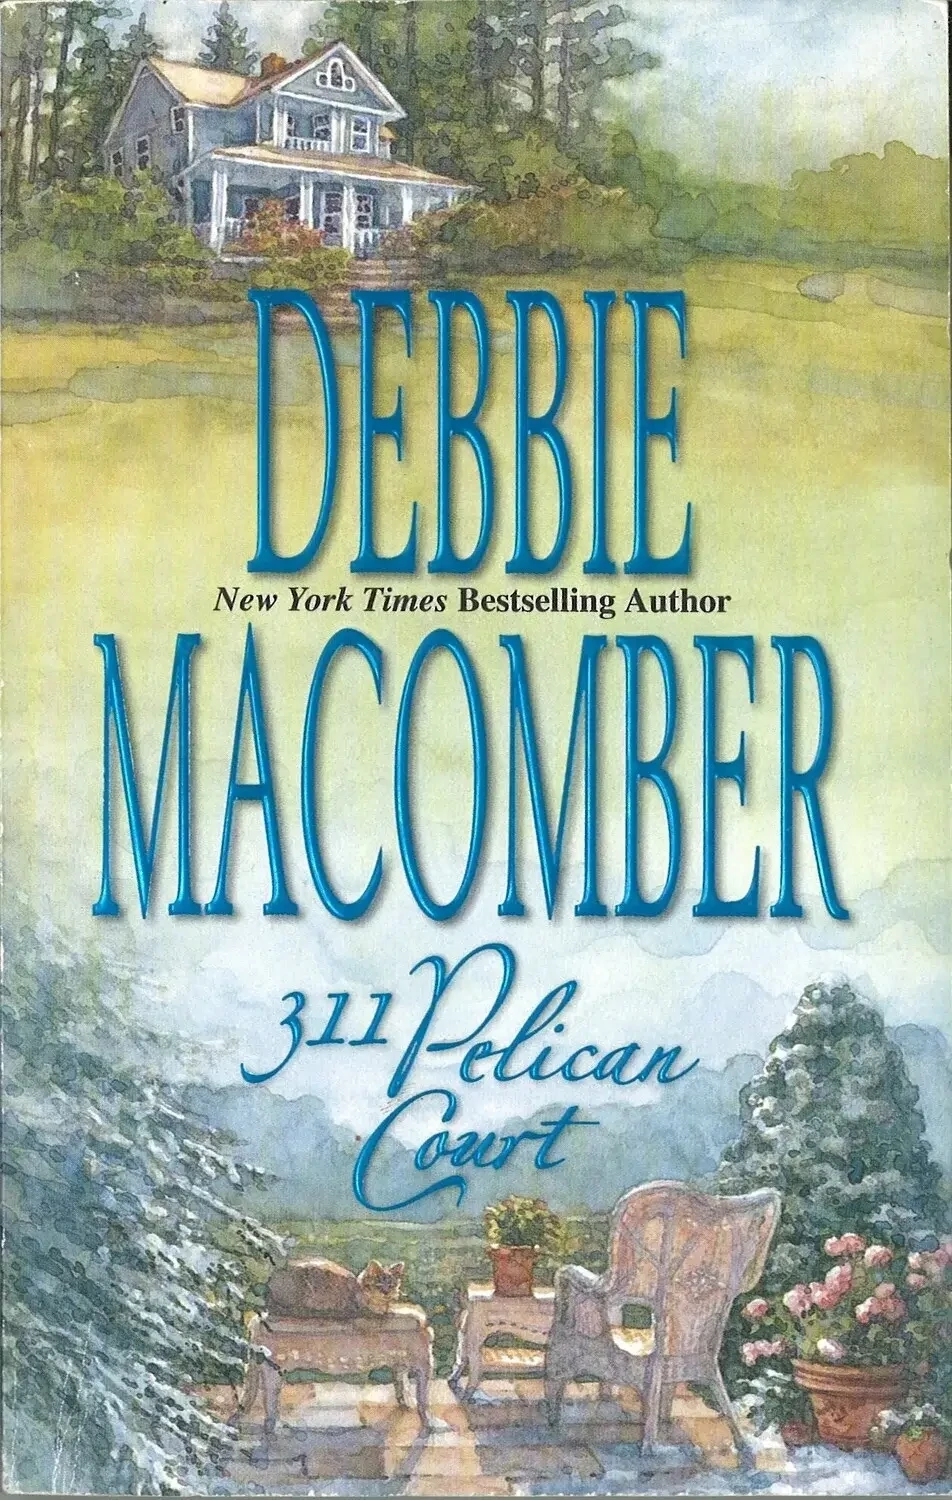 311 Pelican Court (Cedar Cove novel, Book 3) by Debbie Macomber